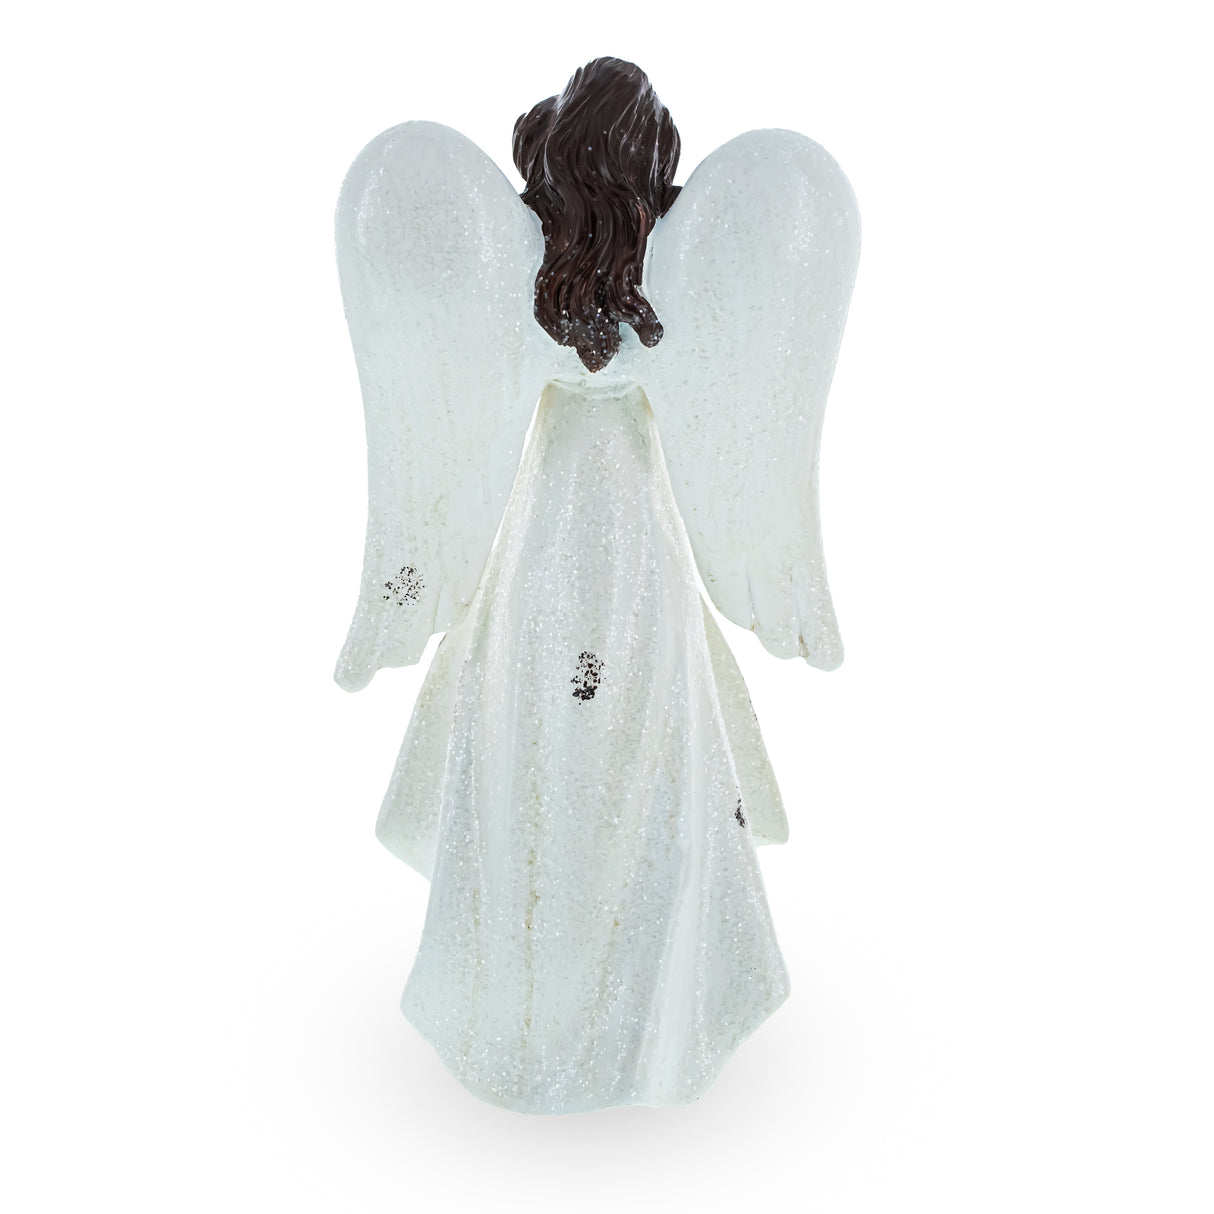 Buy Religious Figurines Angels by BestPysanky Online Gift Ship